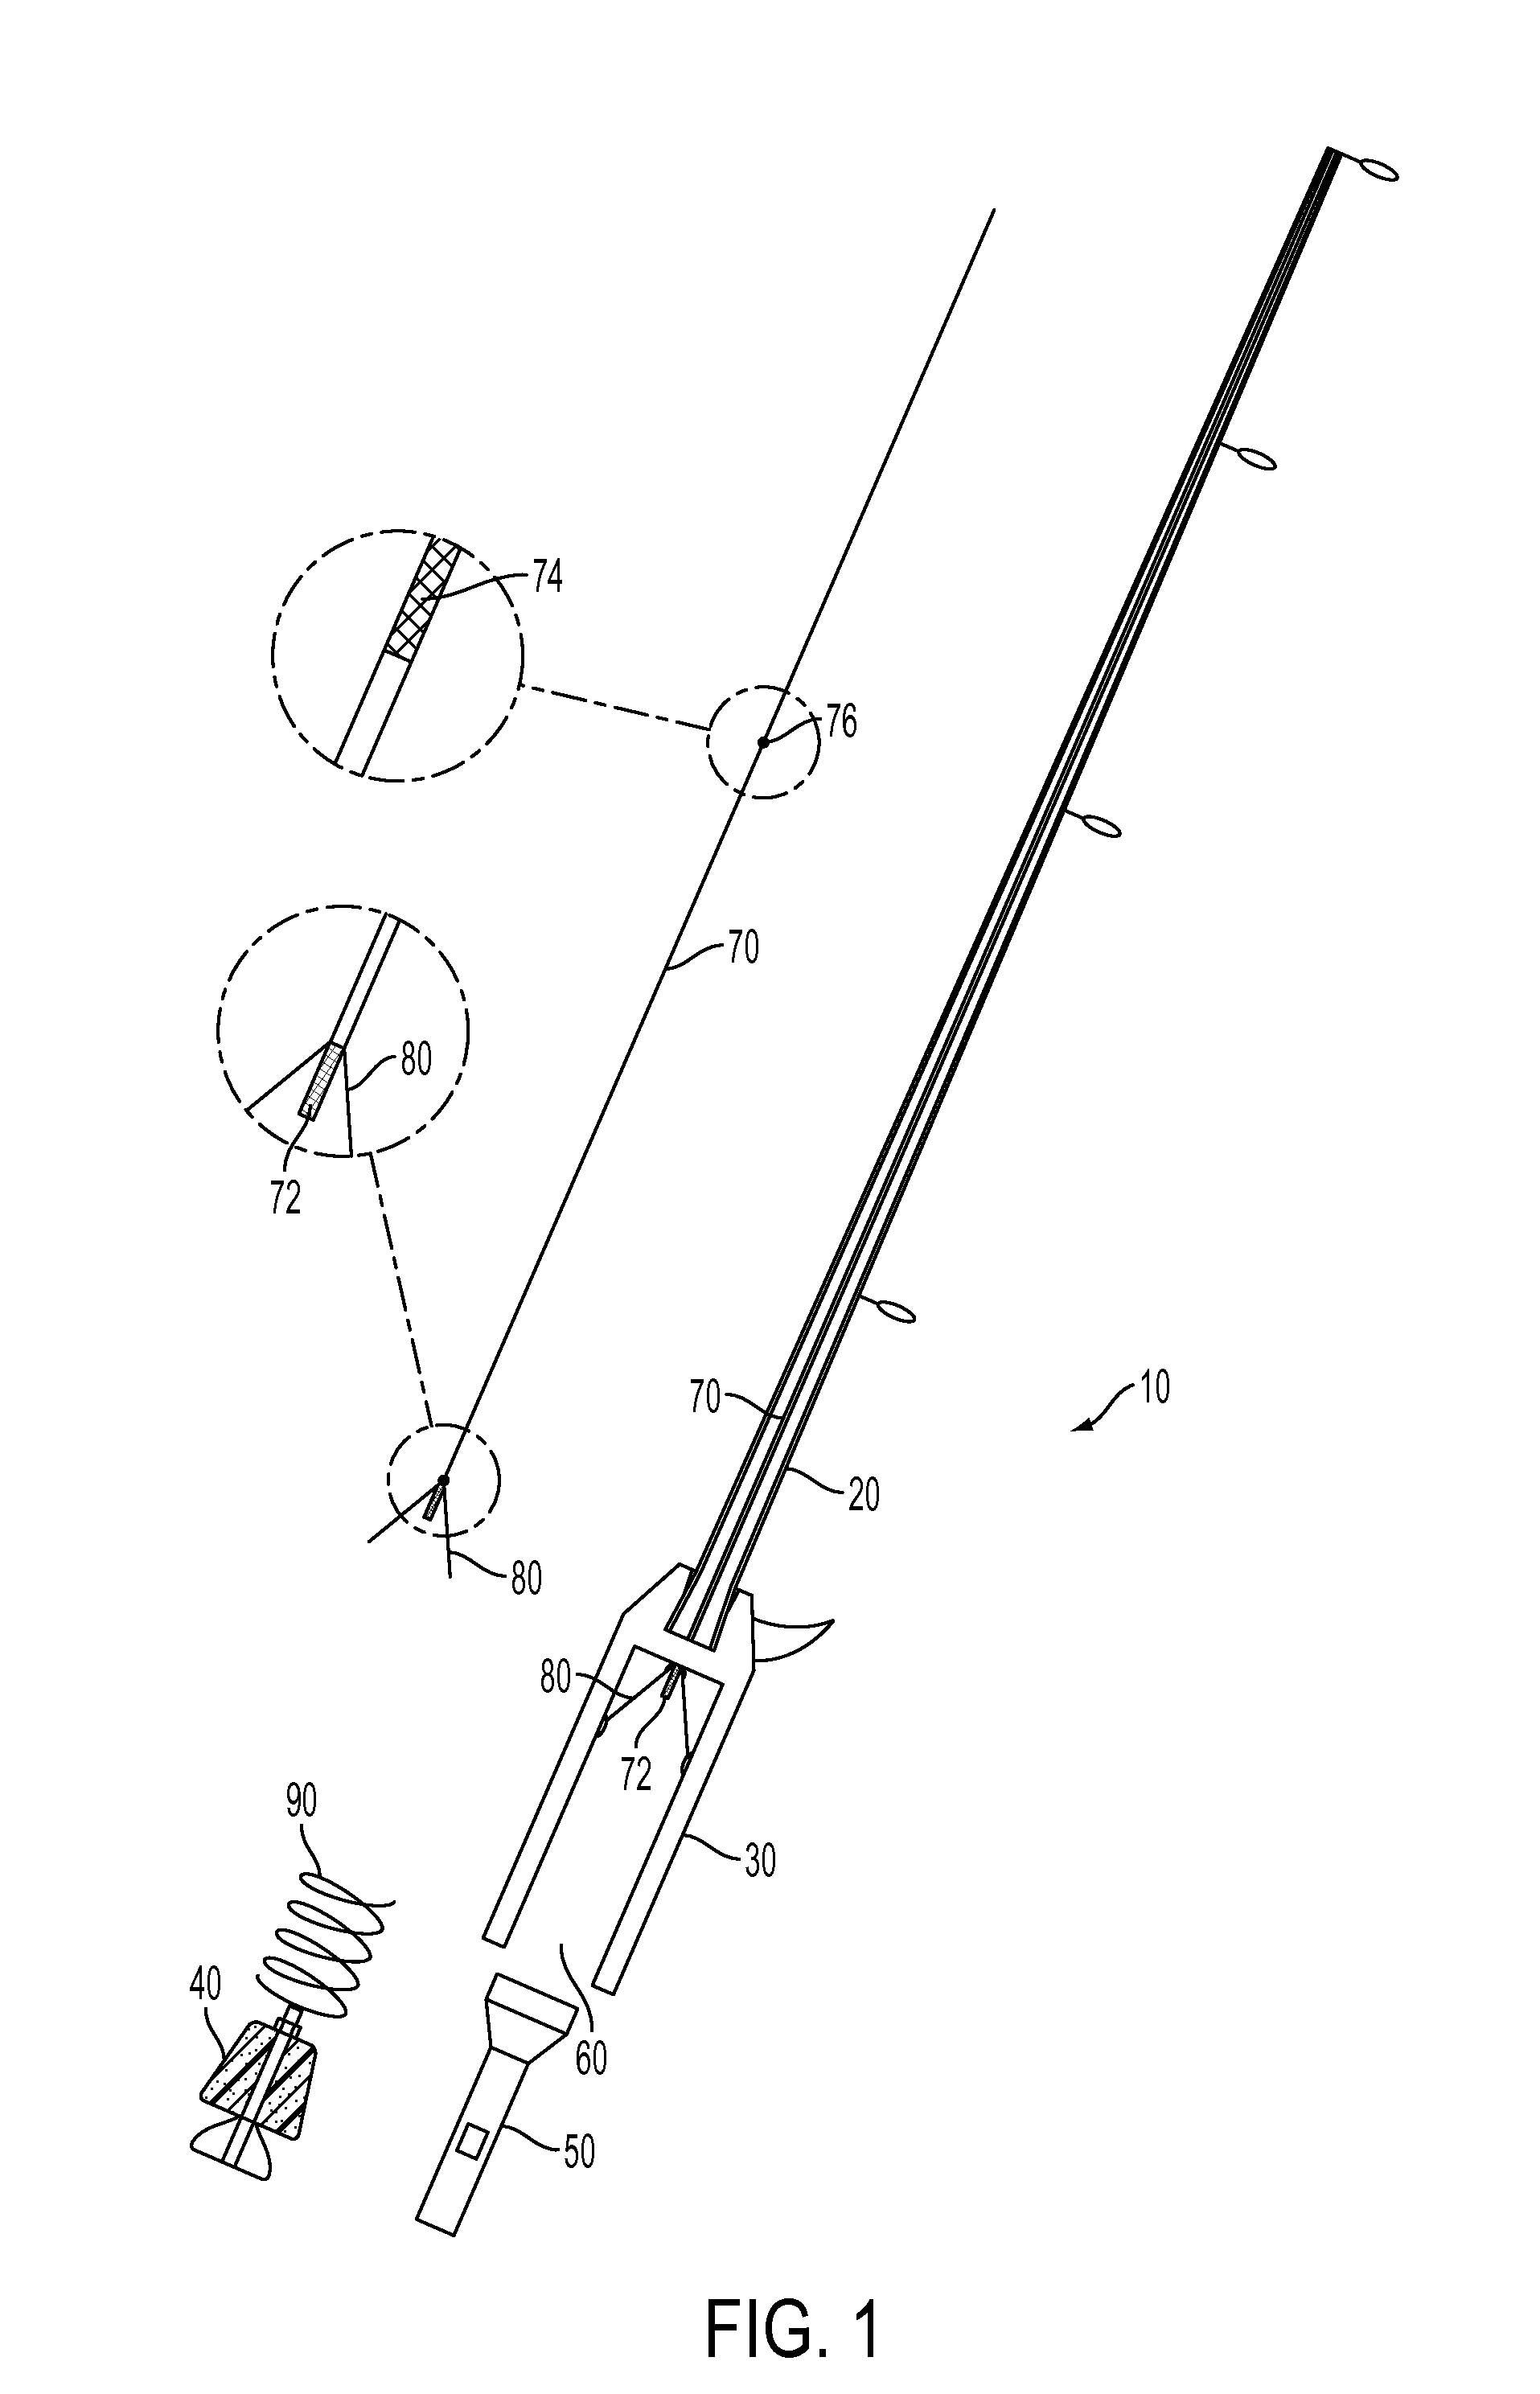 Fishing pole with replaceable illumination element